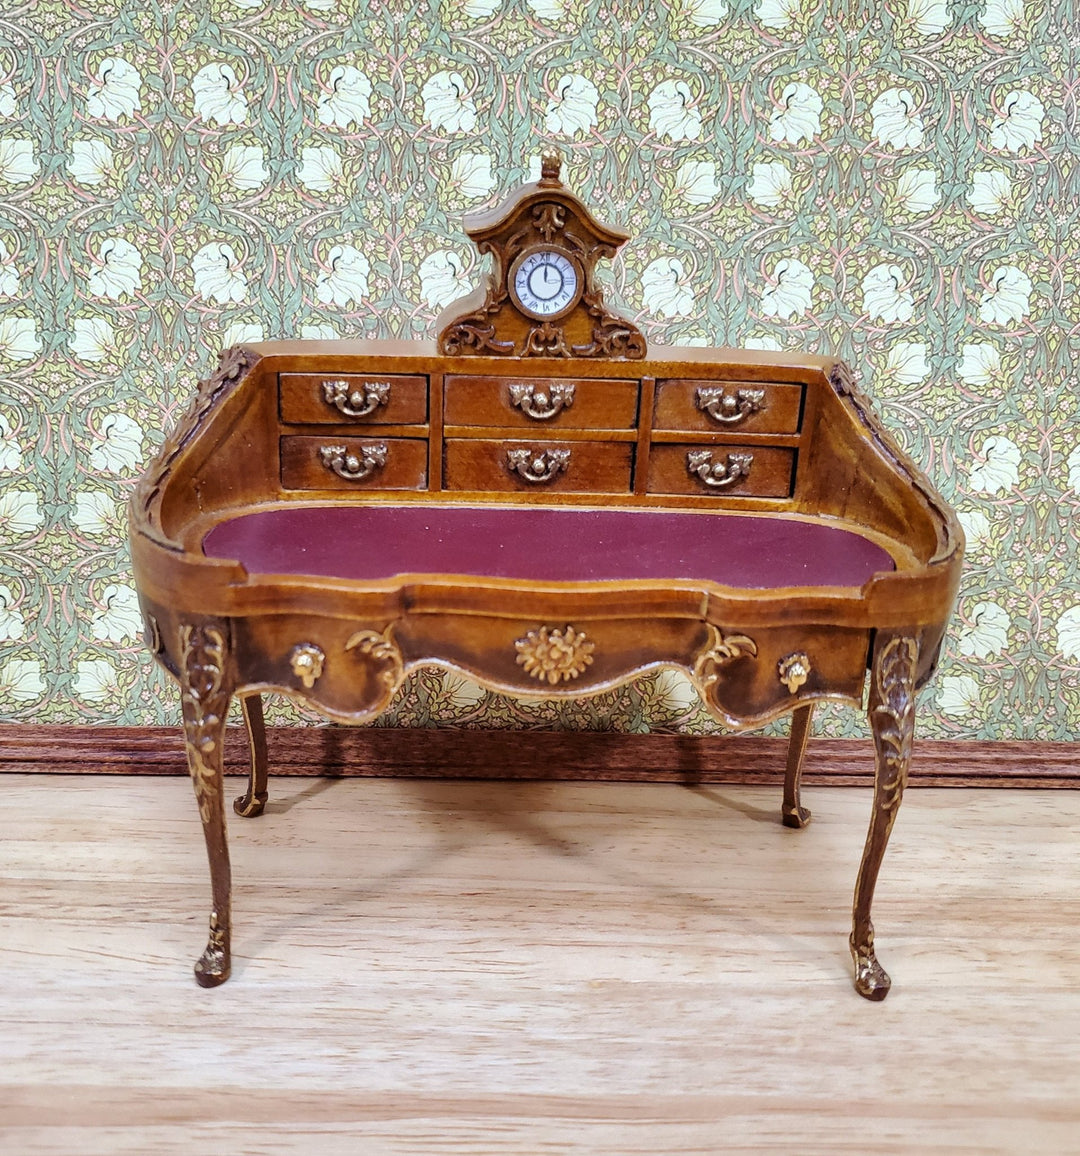 JBM Dollhouse Writing Louis XV Bombe Style Furniture 1:12 Scale Miniature Walnut Finish - Miniature Crush